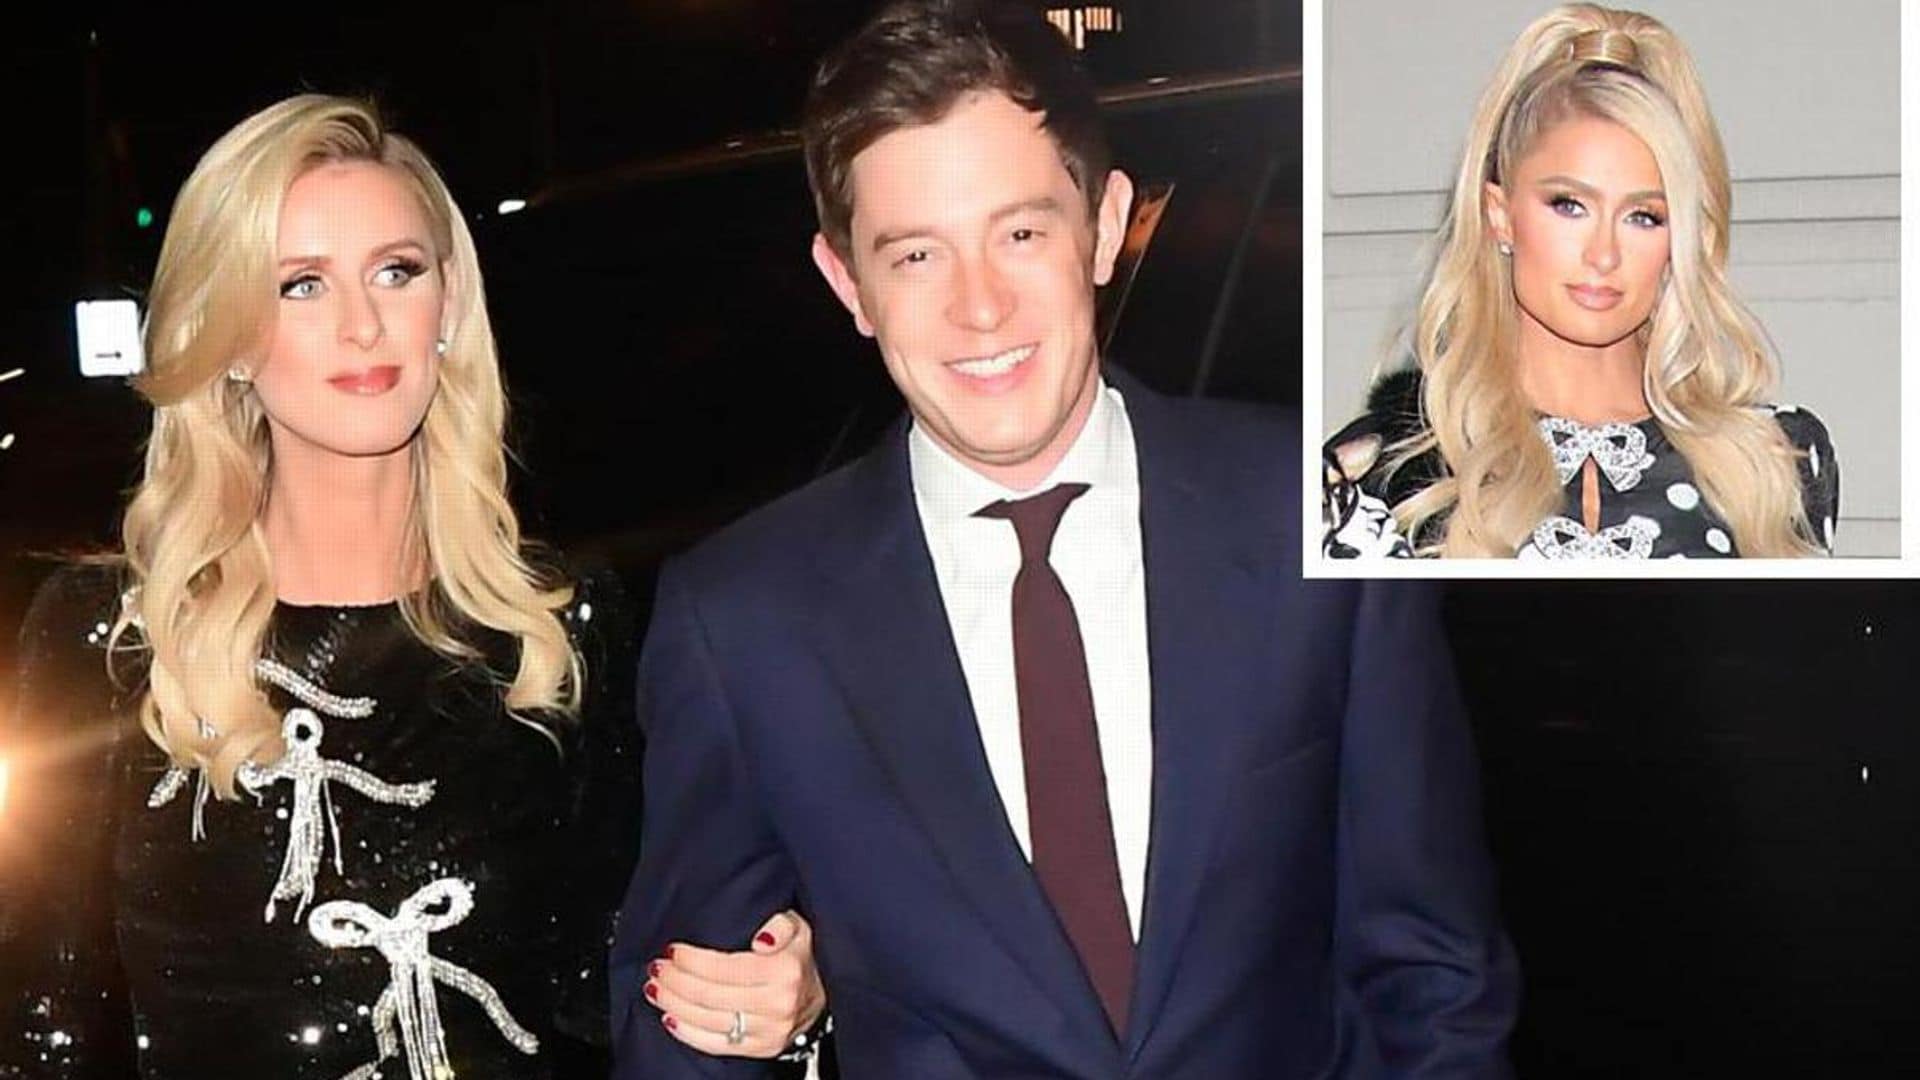 Paris Hilton shares precious throwback to celebrate Nicky Hilton’s baby announcement